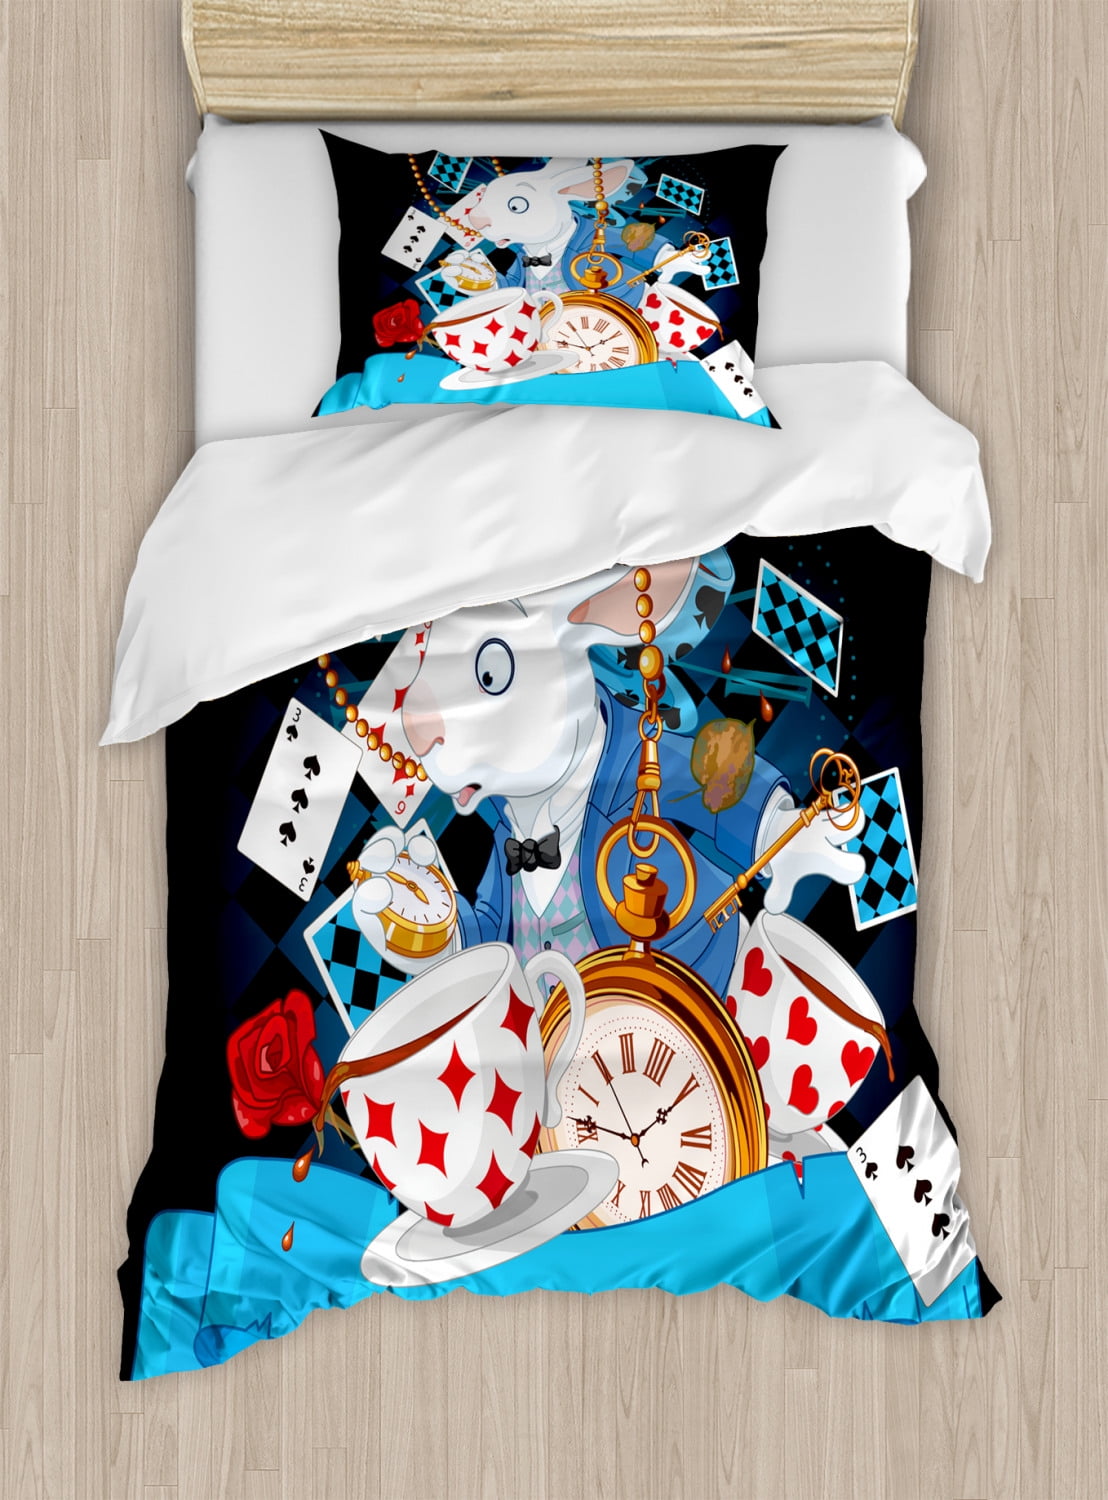 Wonderland Twin Size Duvet Cover Set, Alice In Wonderland Twin Bed Set